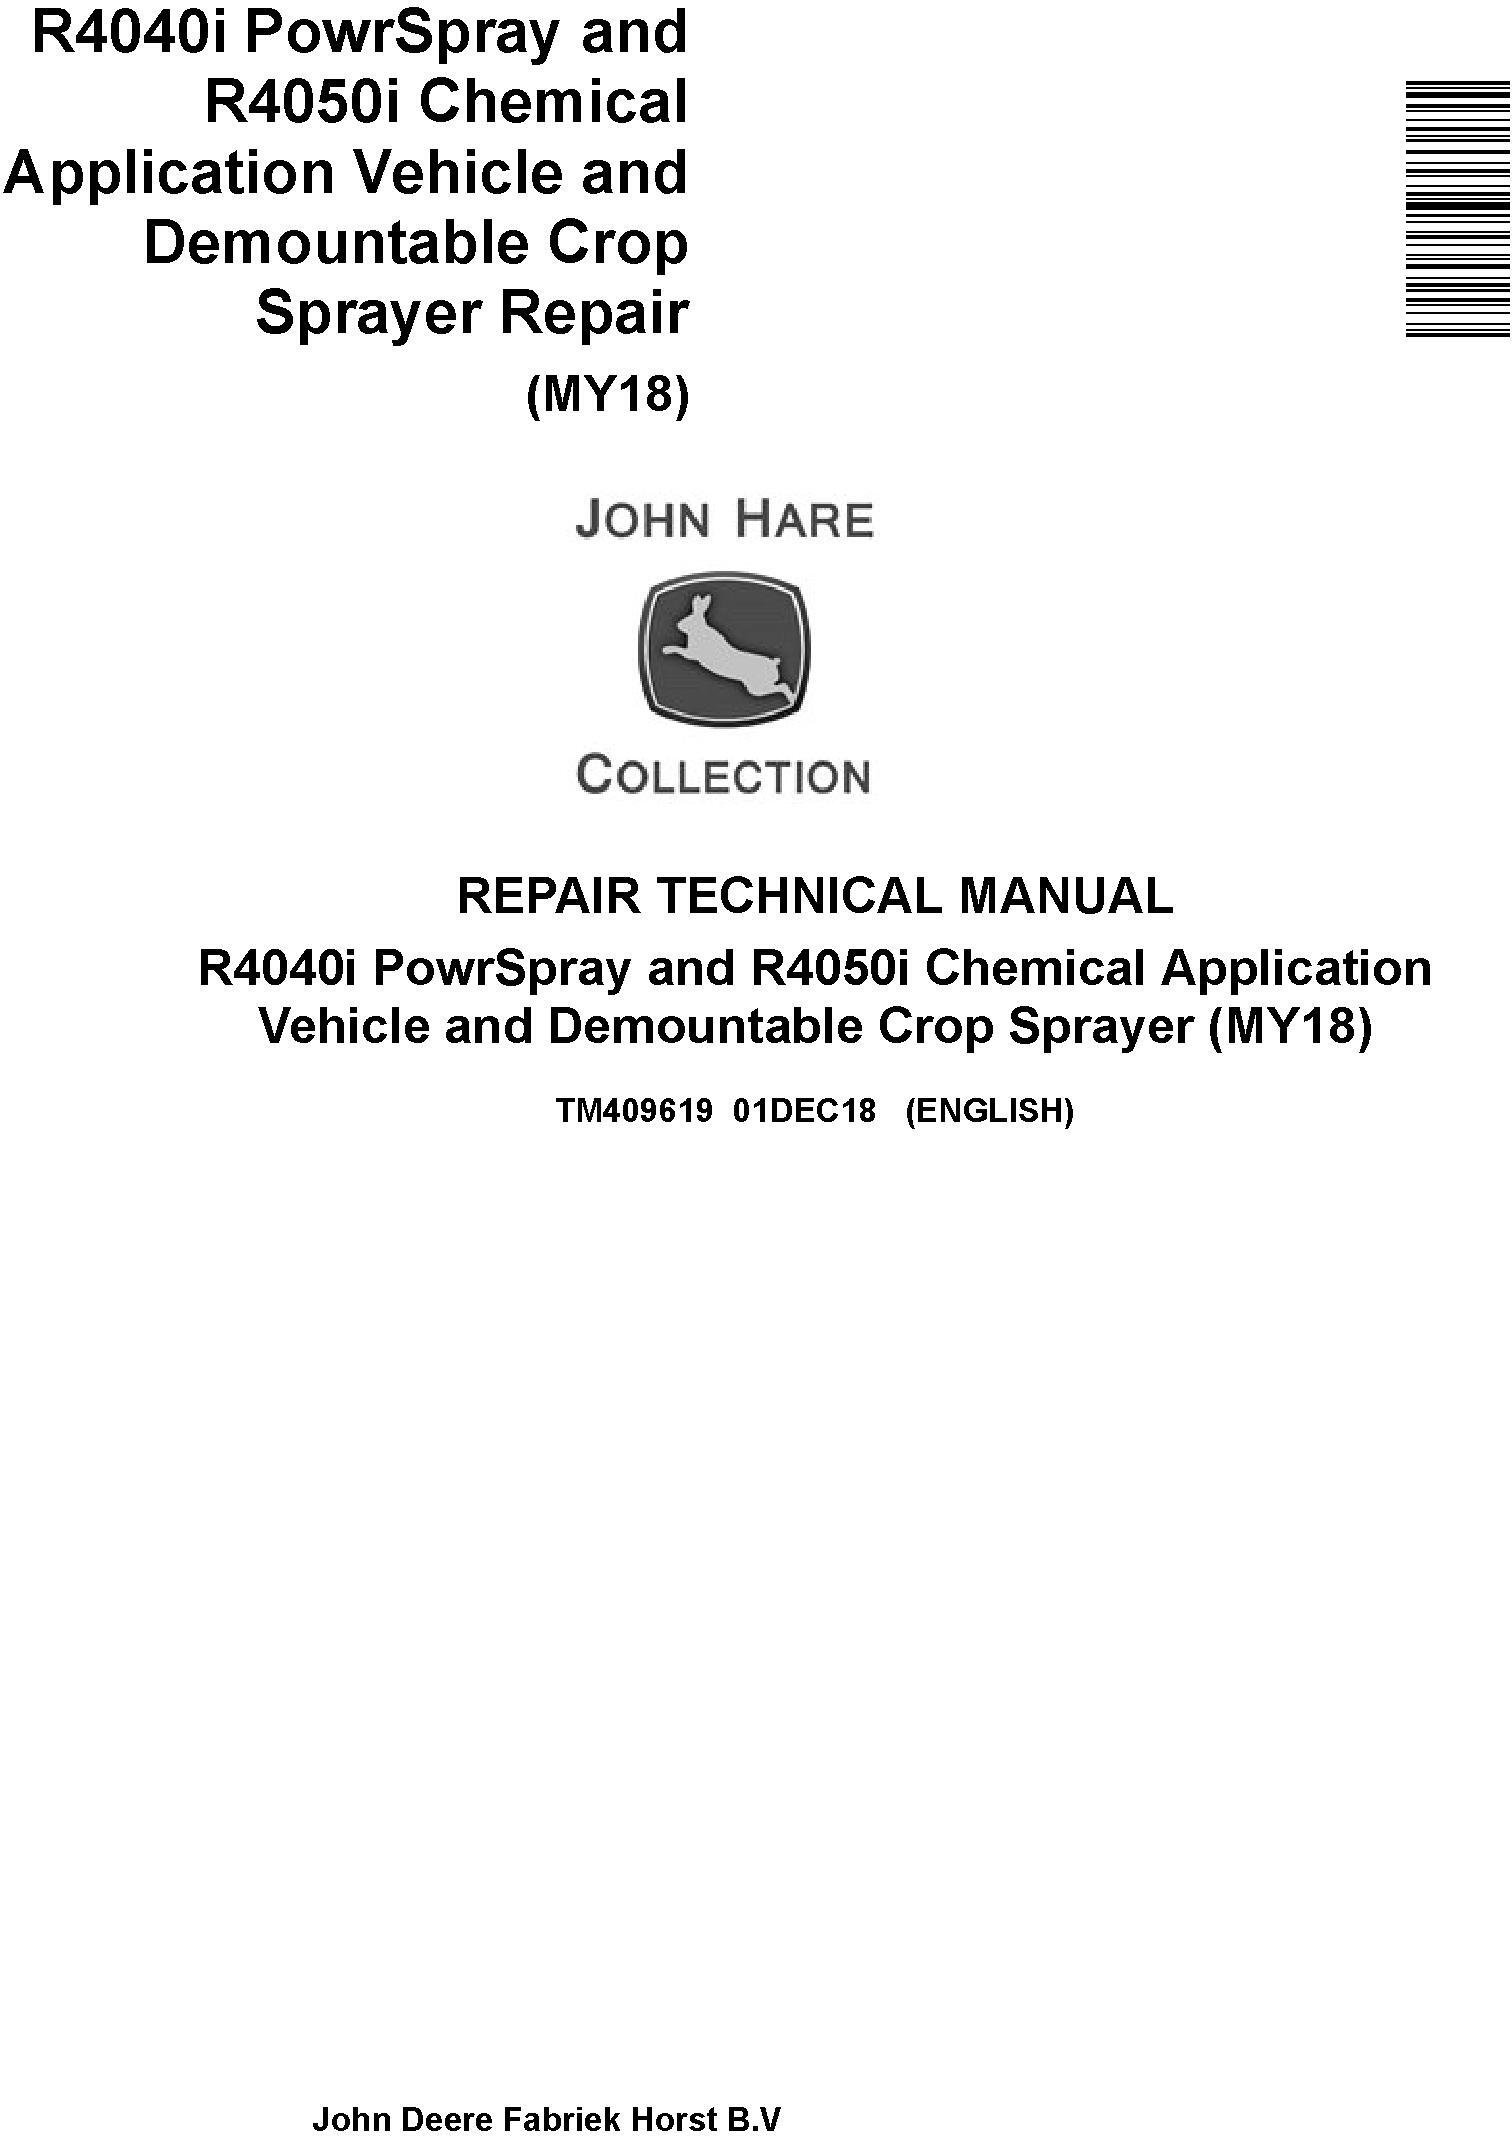 John Deere R4040i, R4050i Demountable Crop Sprayer (MY18) Repair Technical Service Manual (TM409619) - 19261